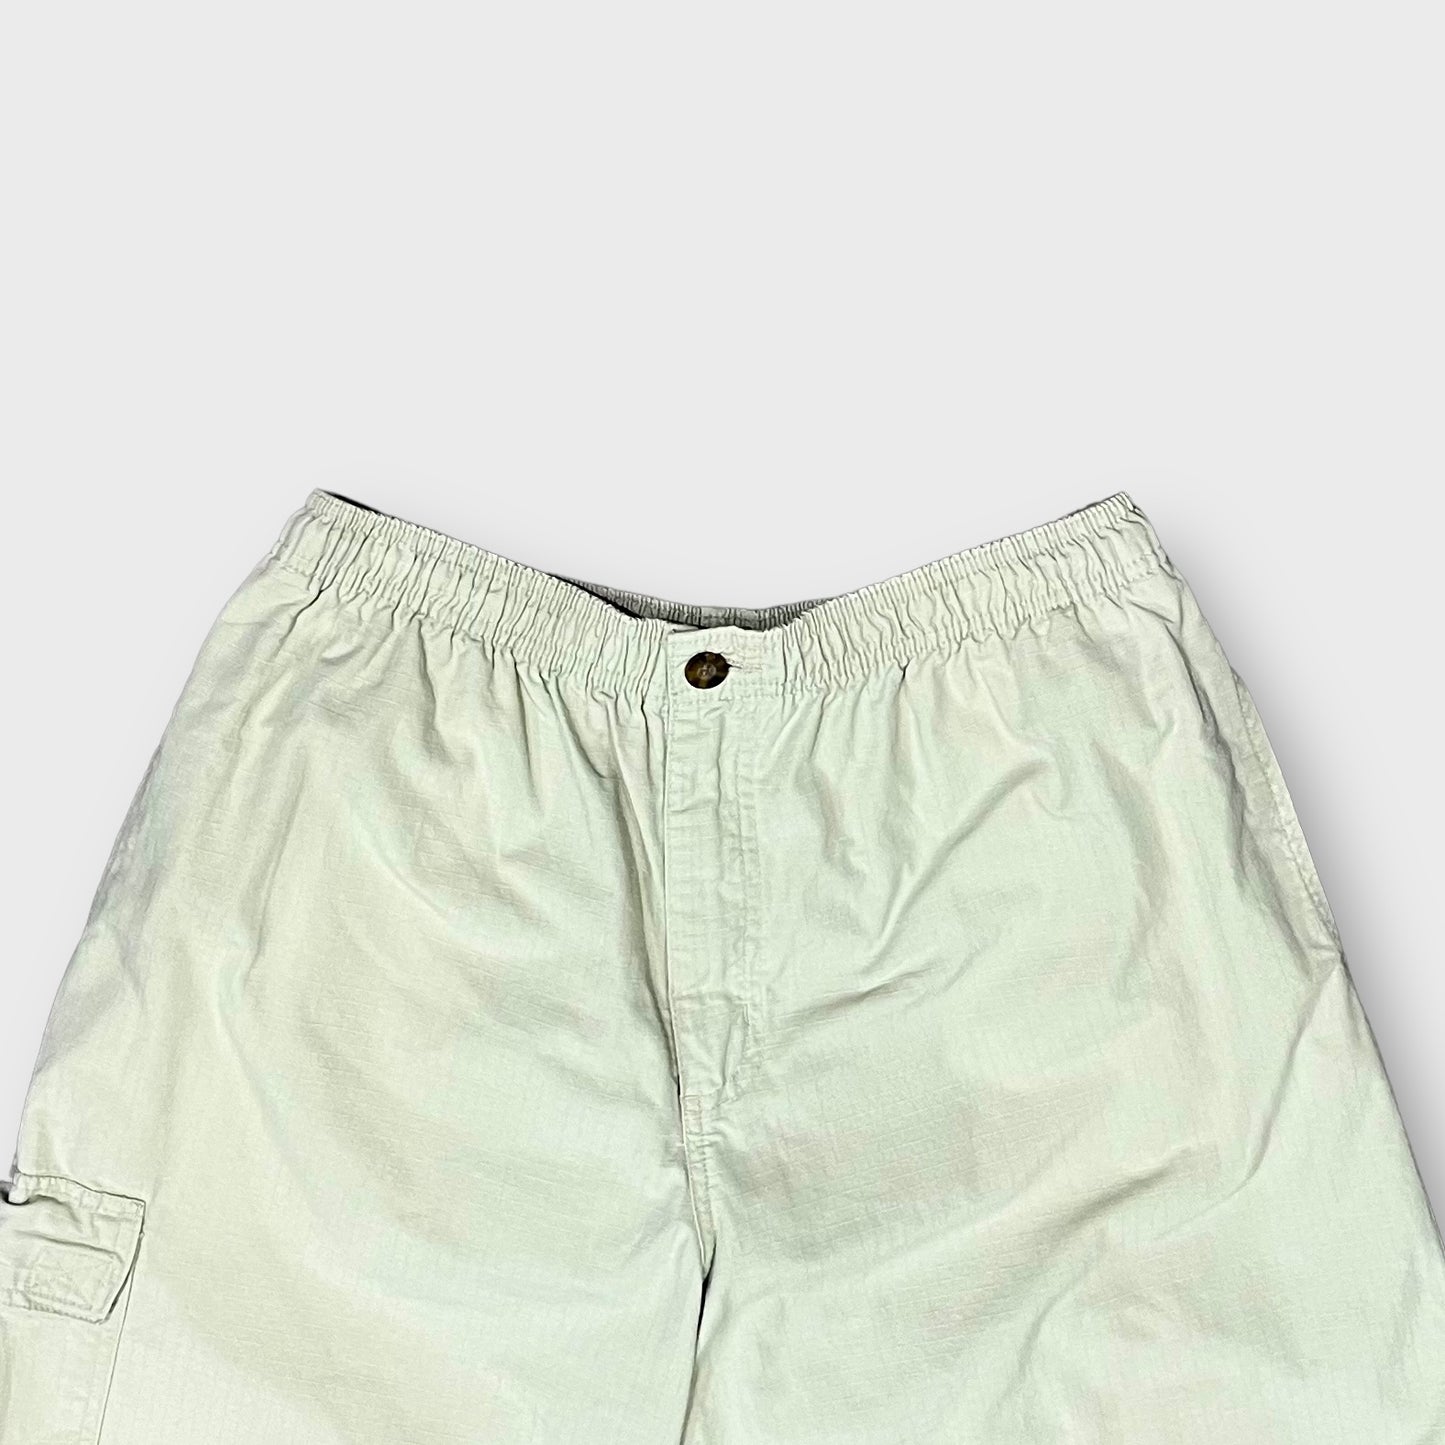 90’s “UMBRO” cotton shorts